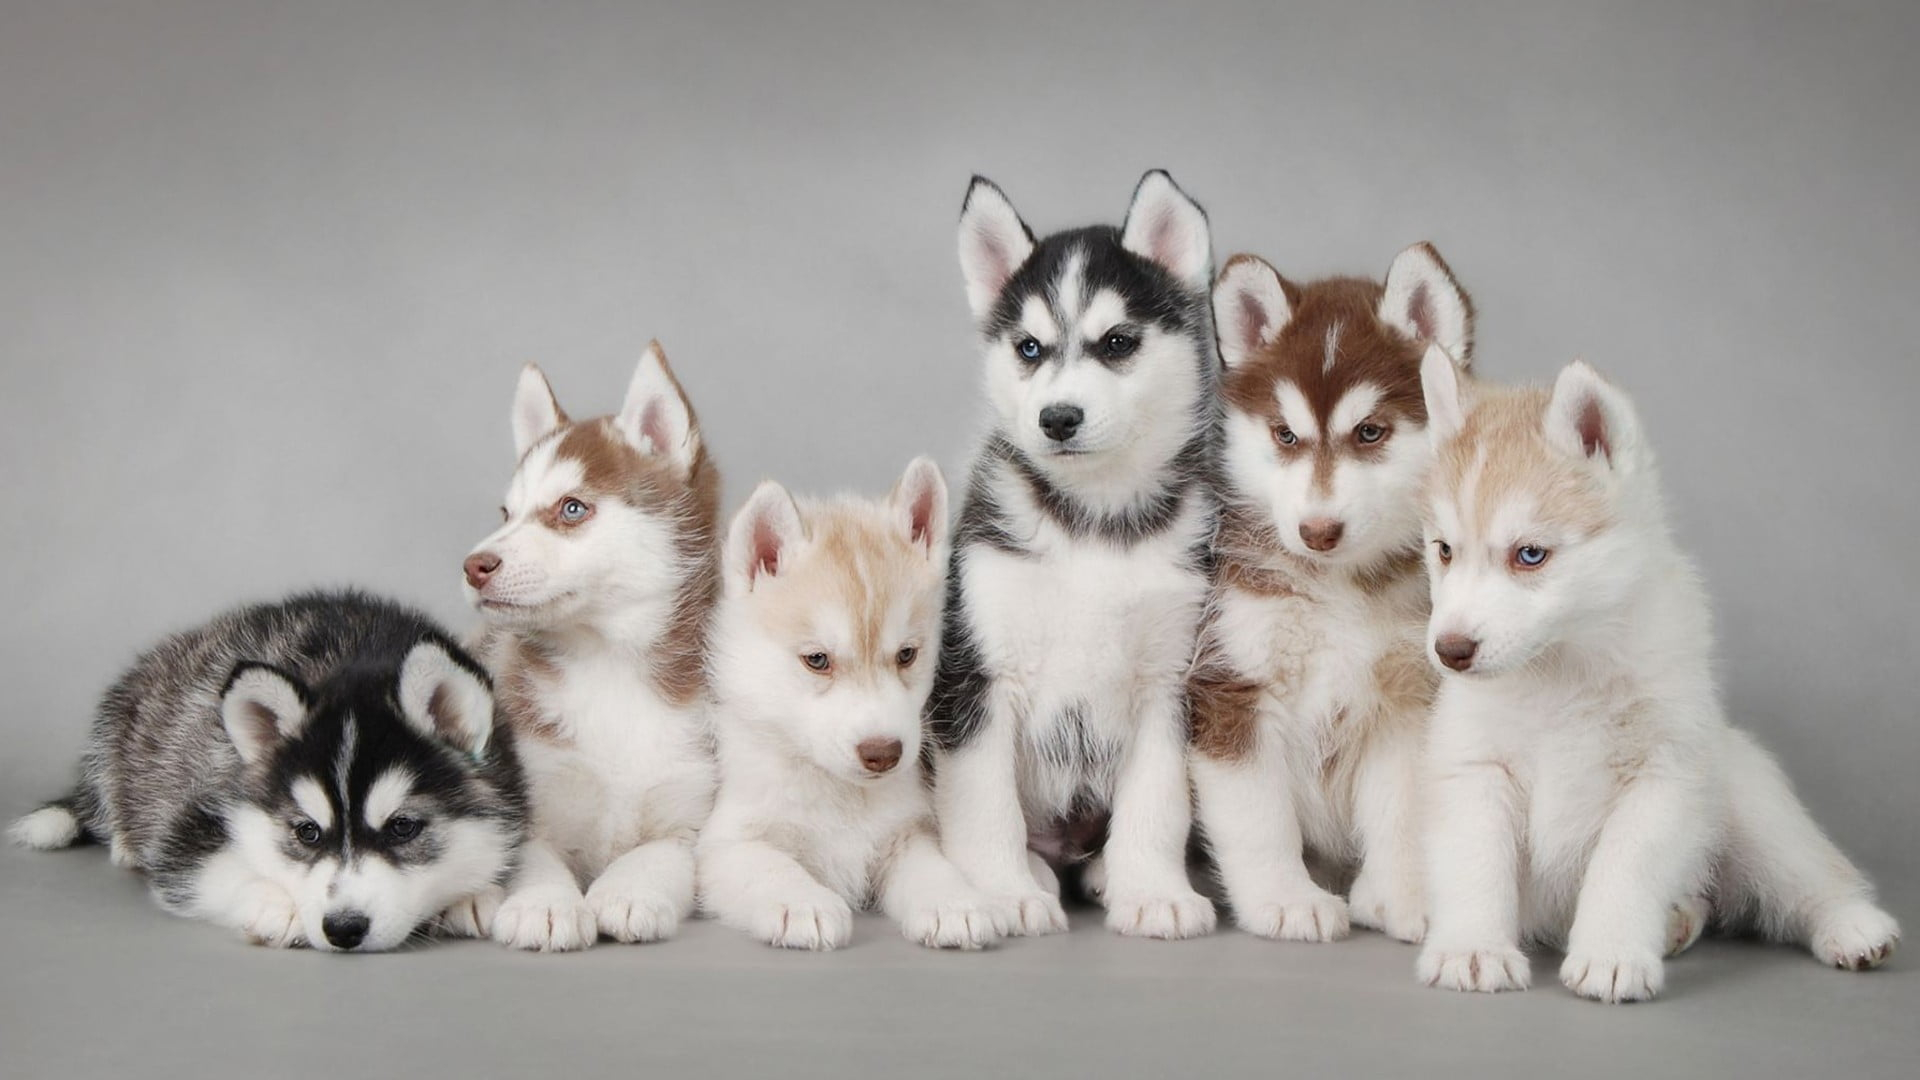 Siberian husky puppy litter, dog wallpaper, puppies, animals, domestic